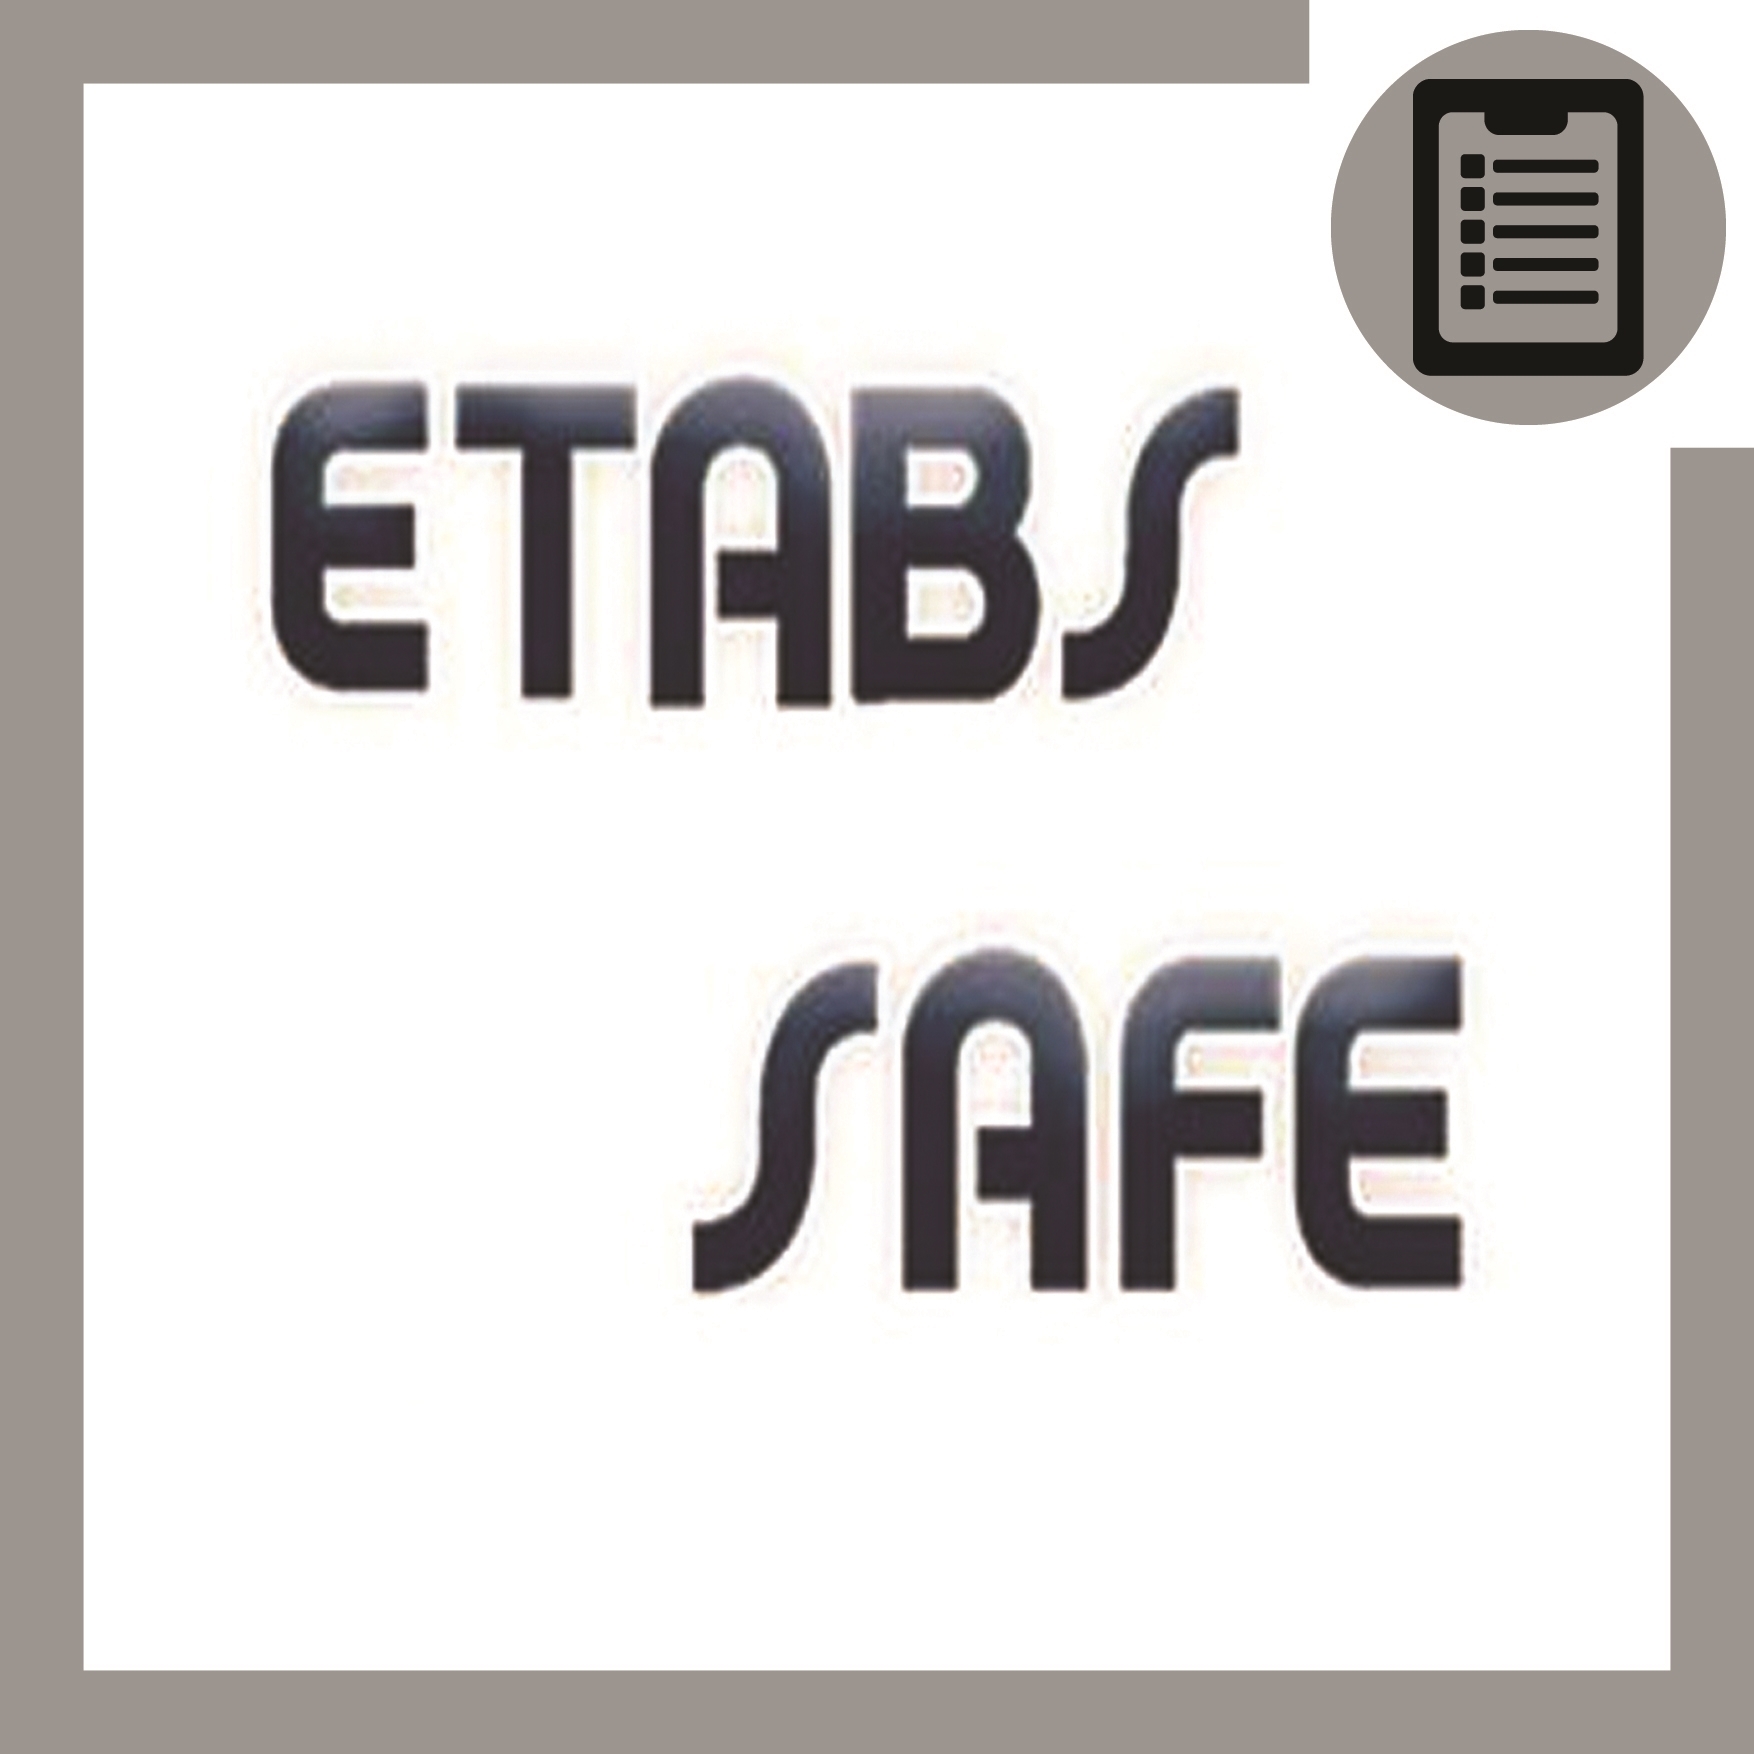 SAFE & ETABS